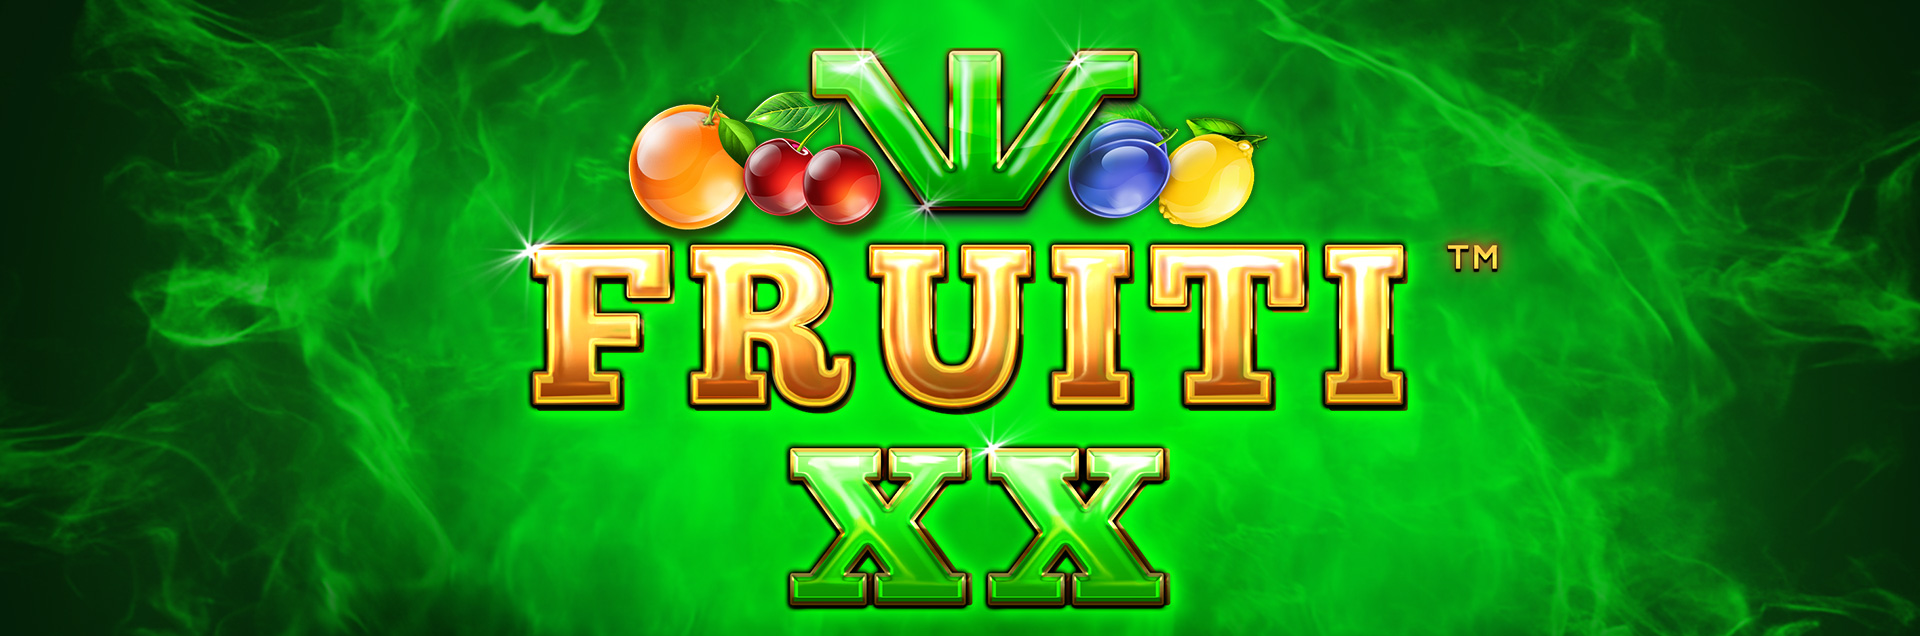 FruitiXX Header Game Image Game